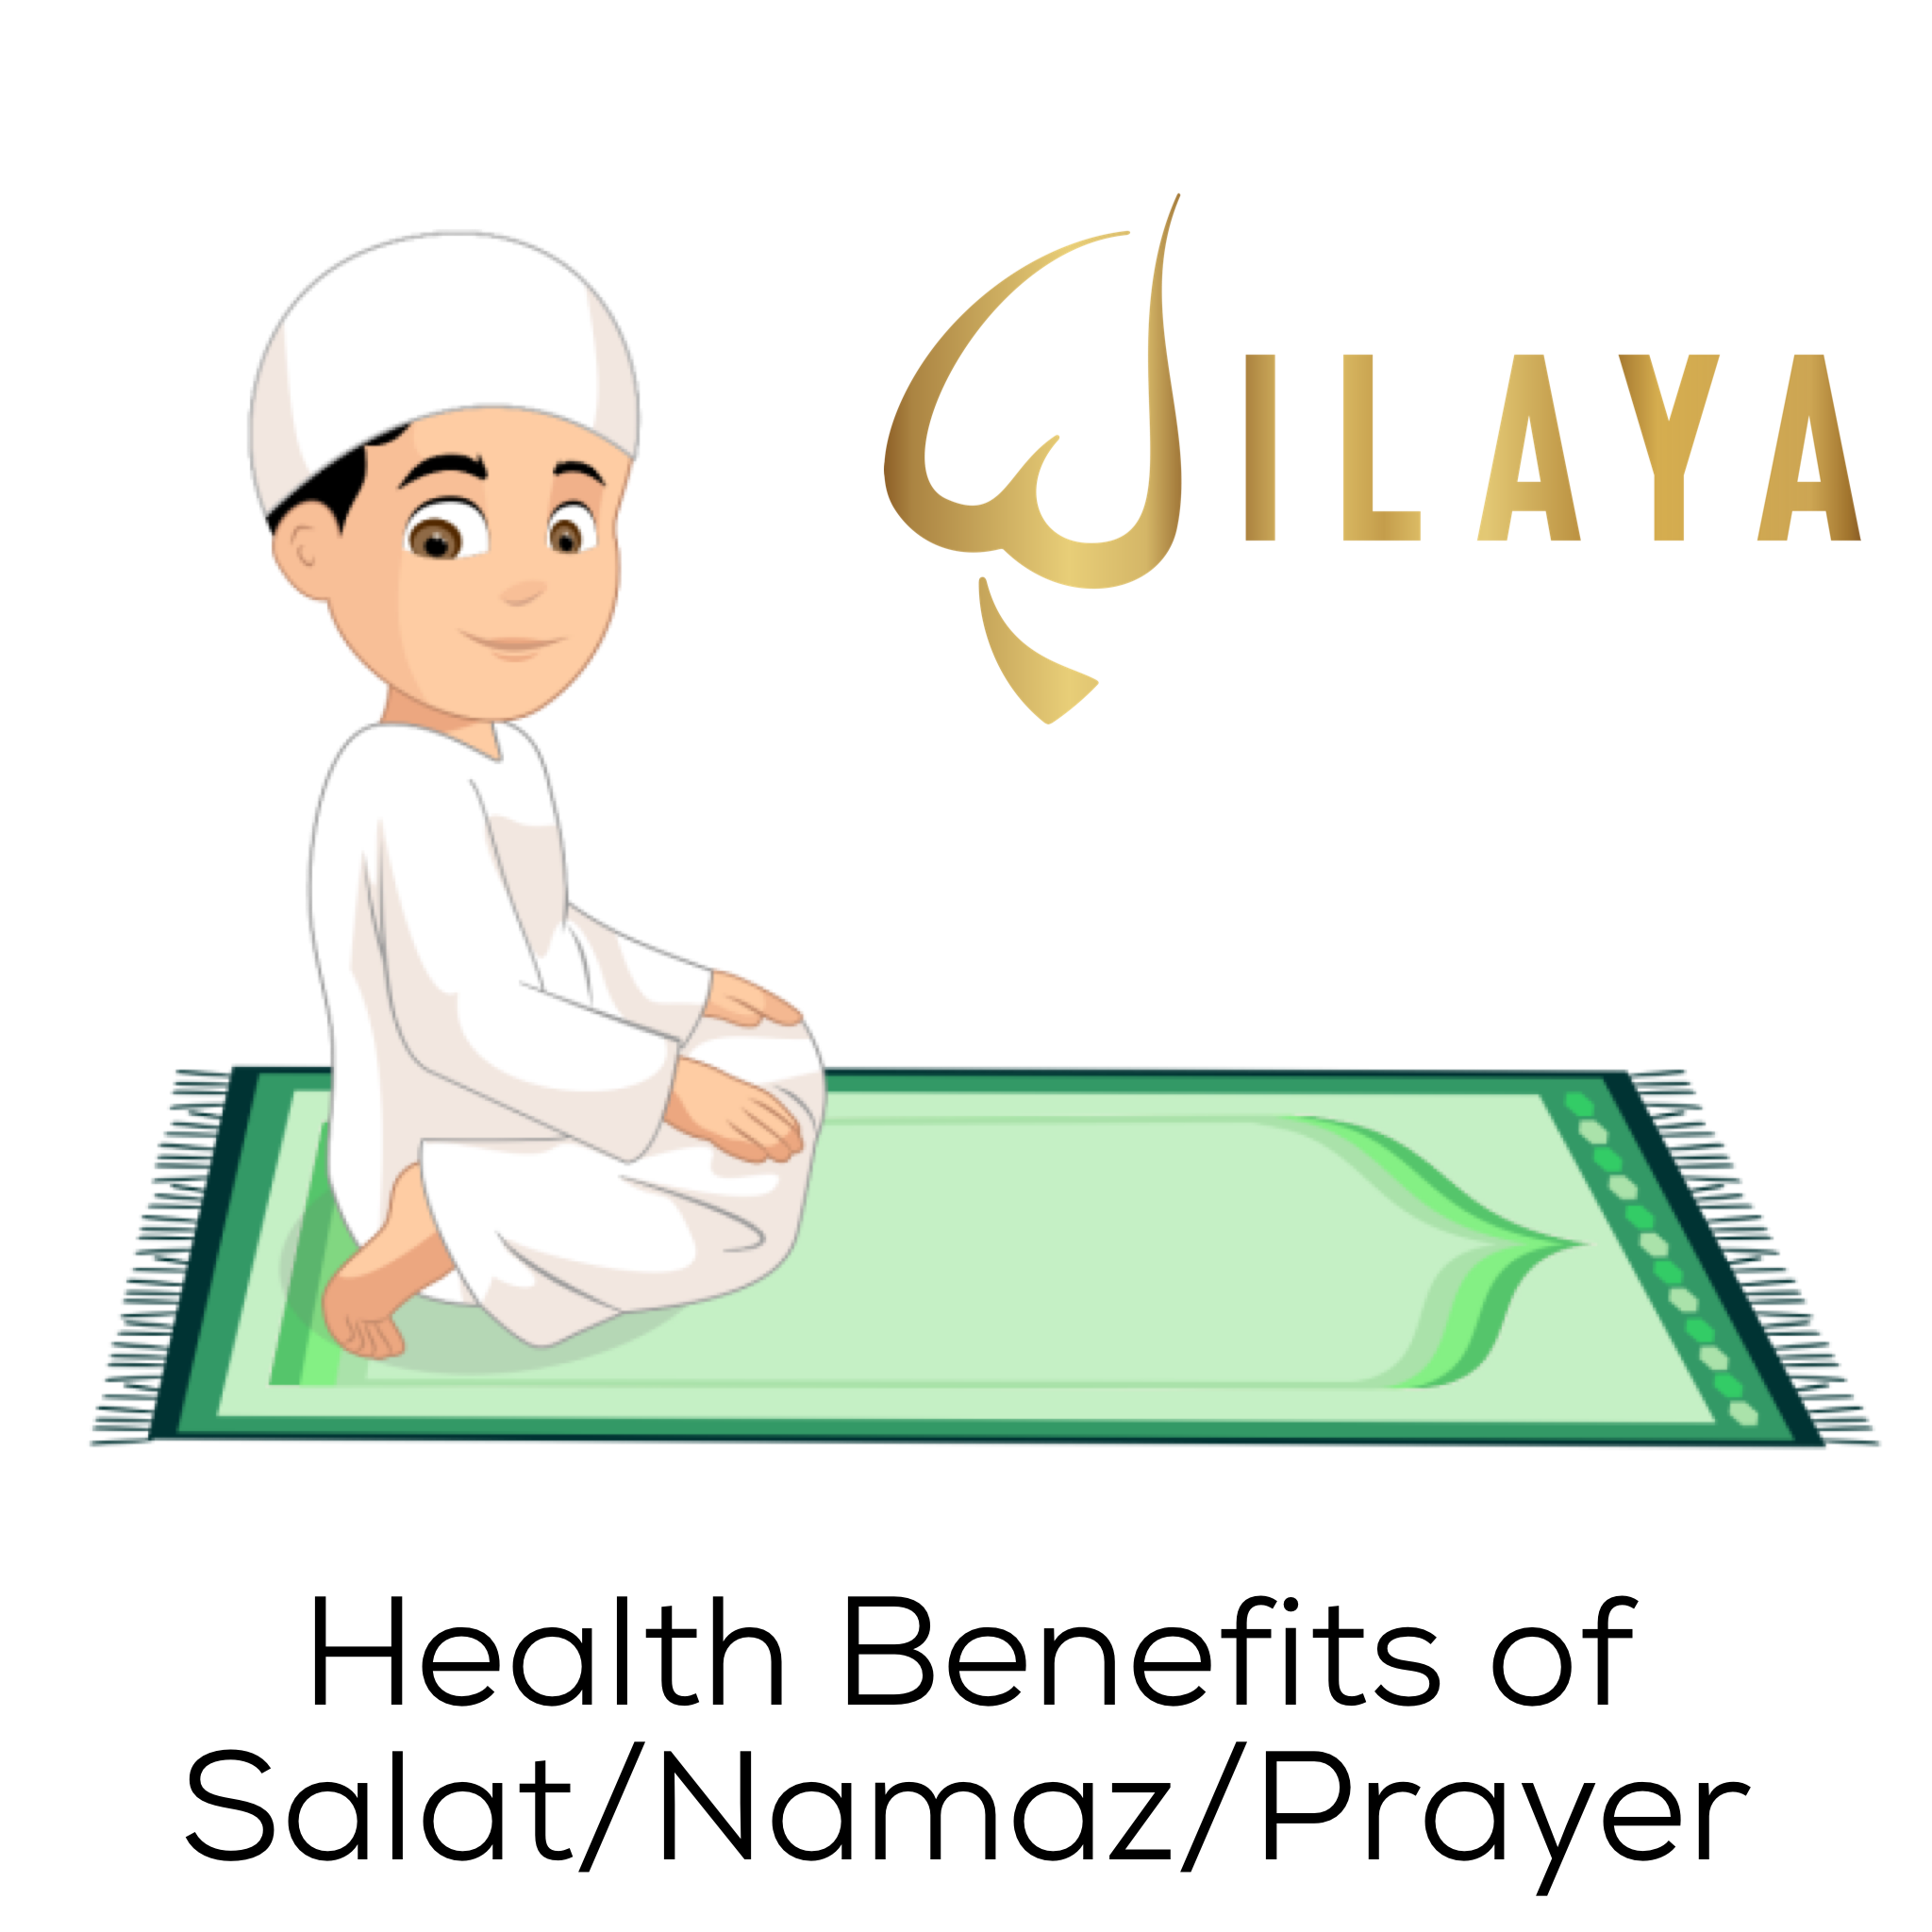 Health Benefits of Salat/Namaz/Prayer